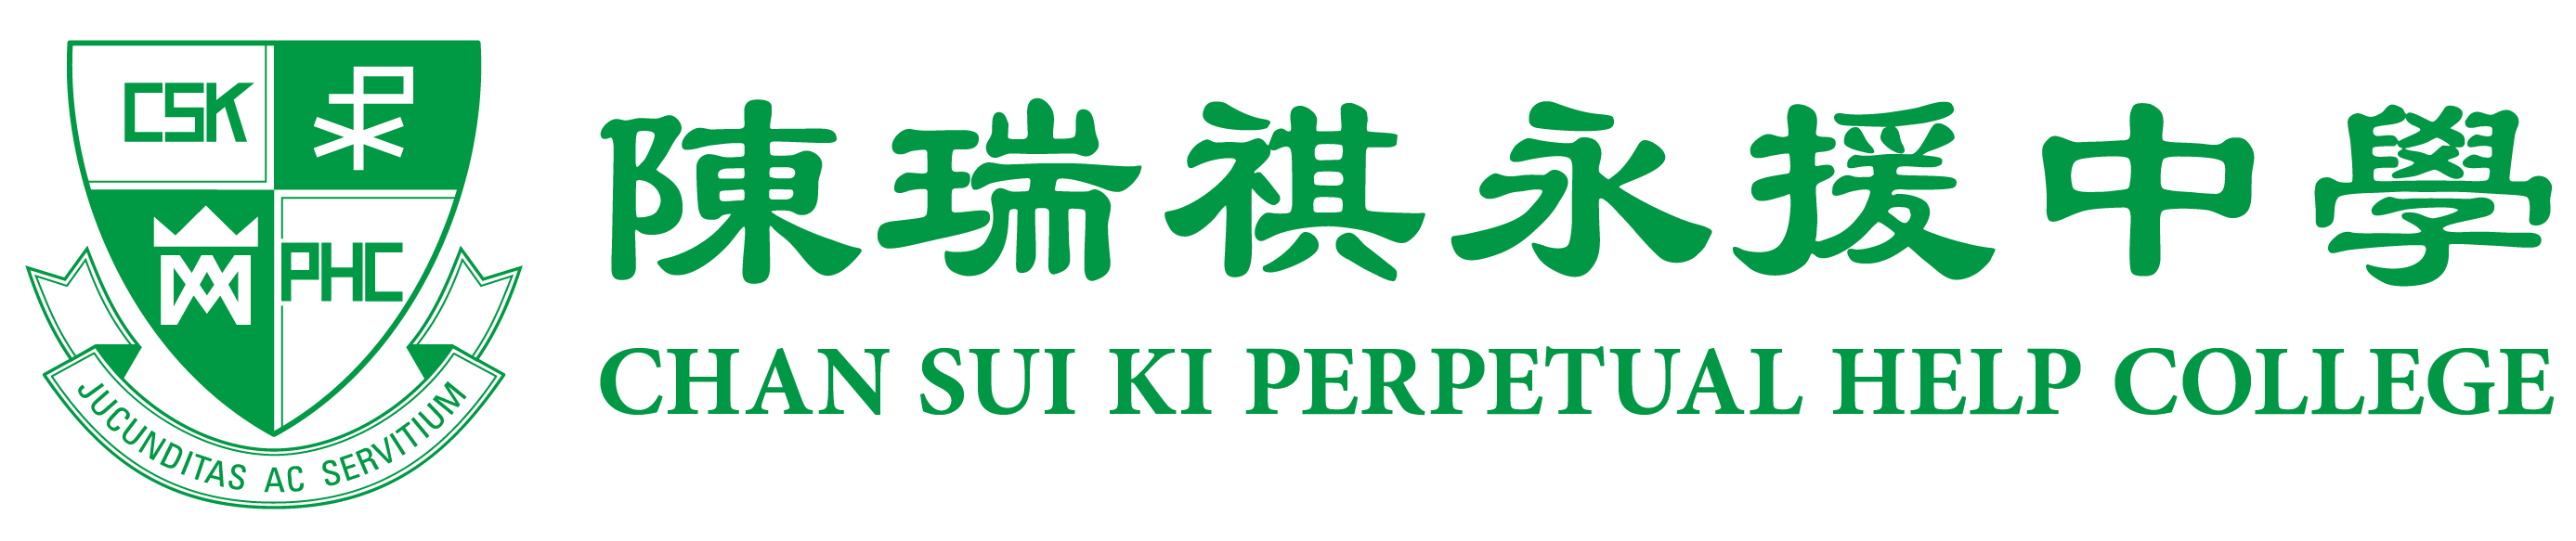 Chan Sui Ki Perpetual Help College